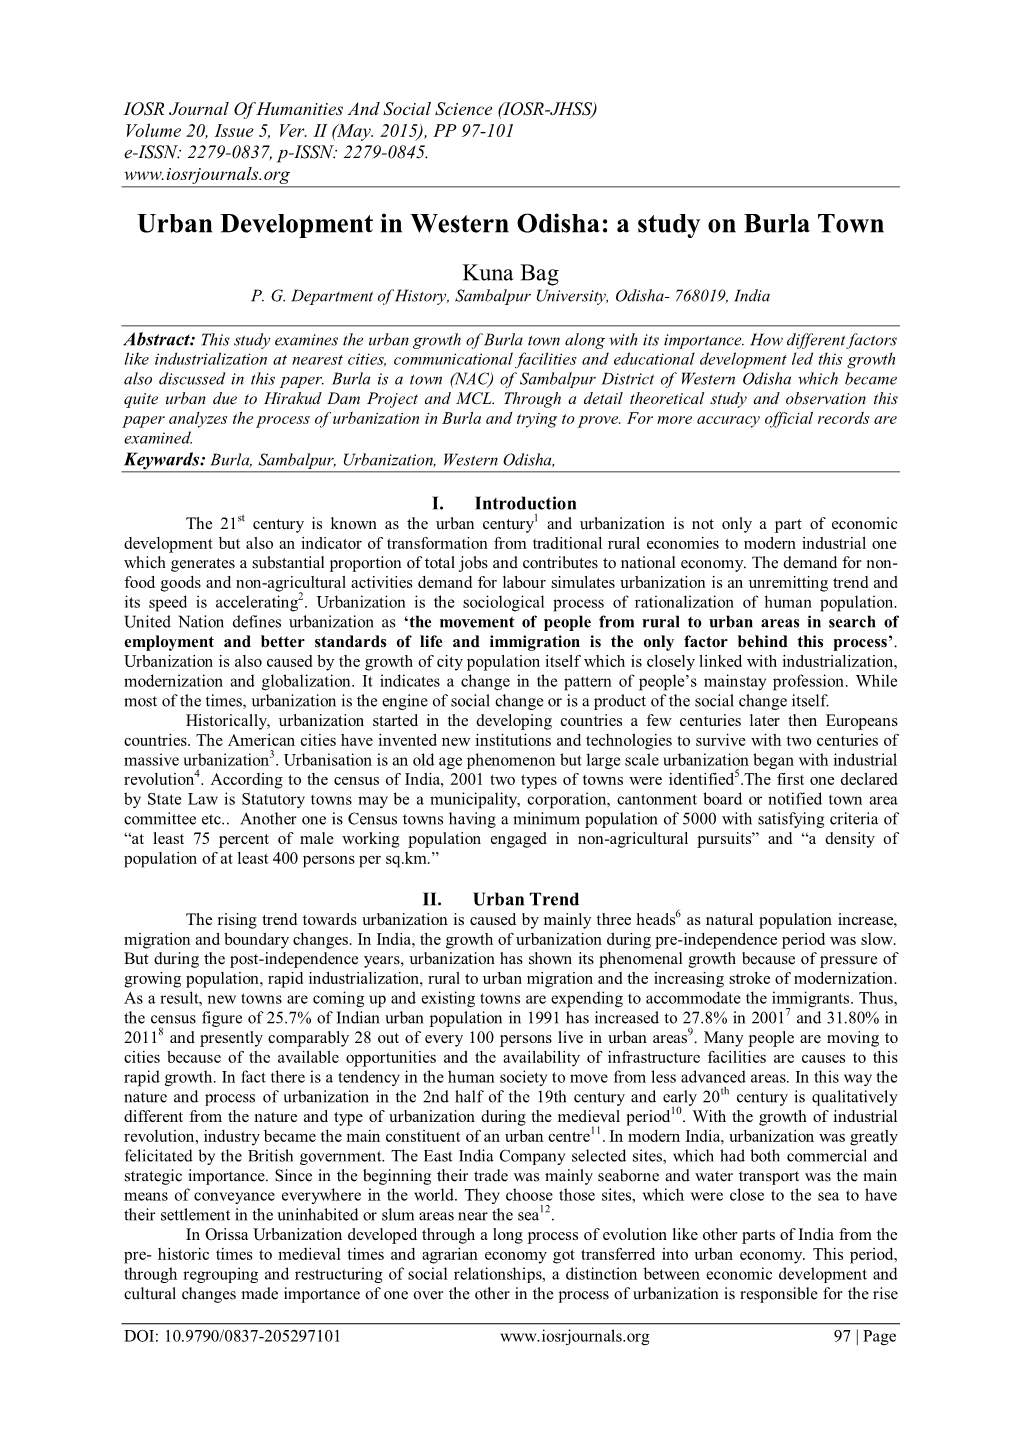 Urban Development in Western Odisha: a Study on Burla Town